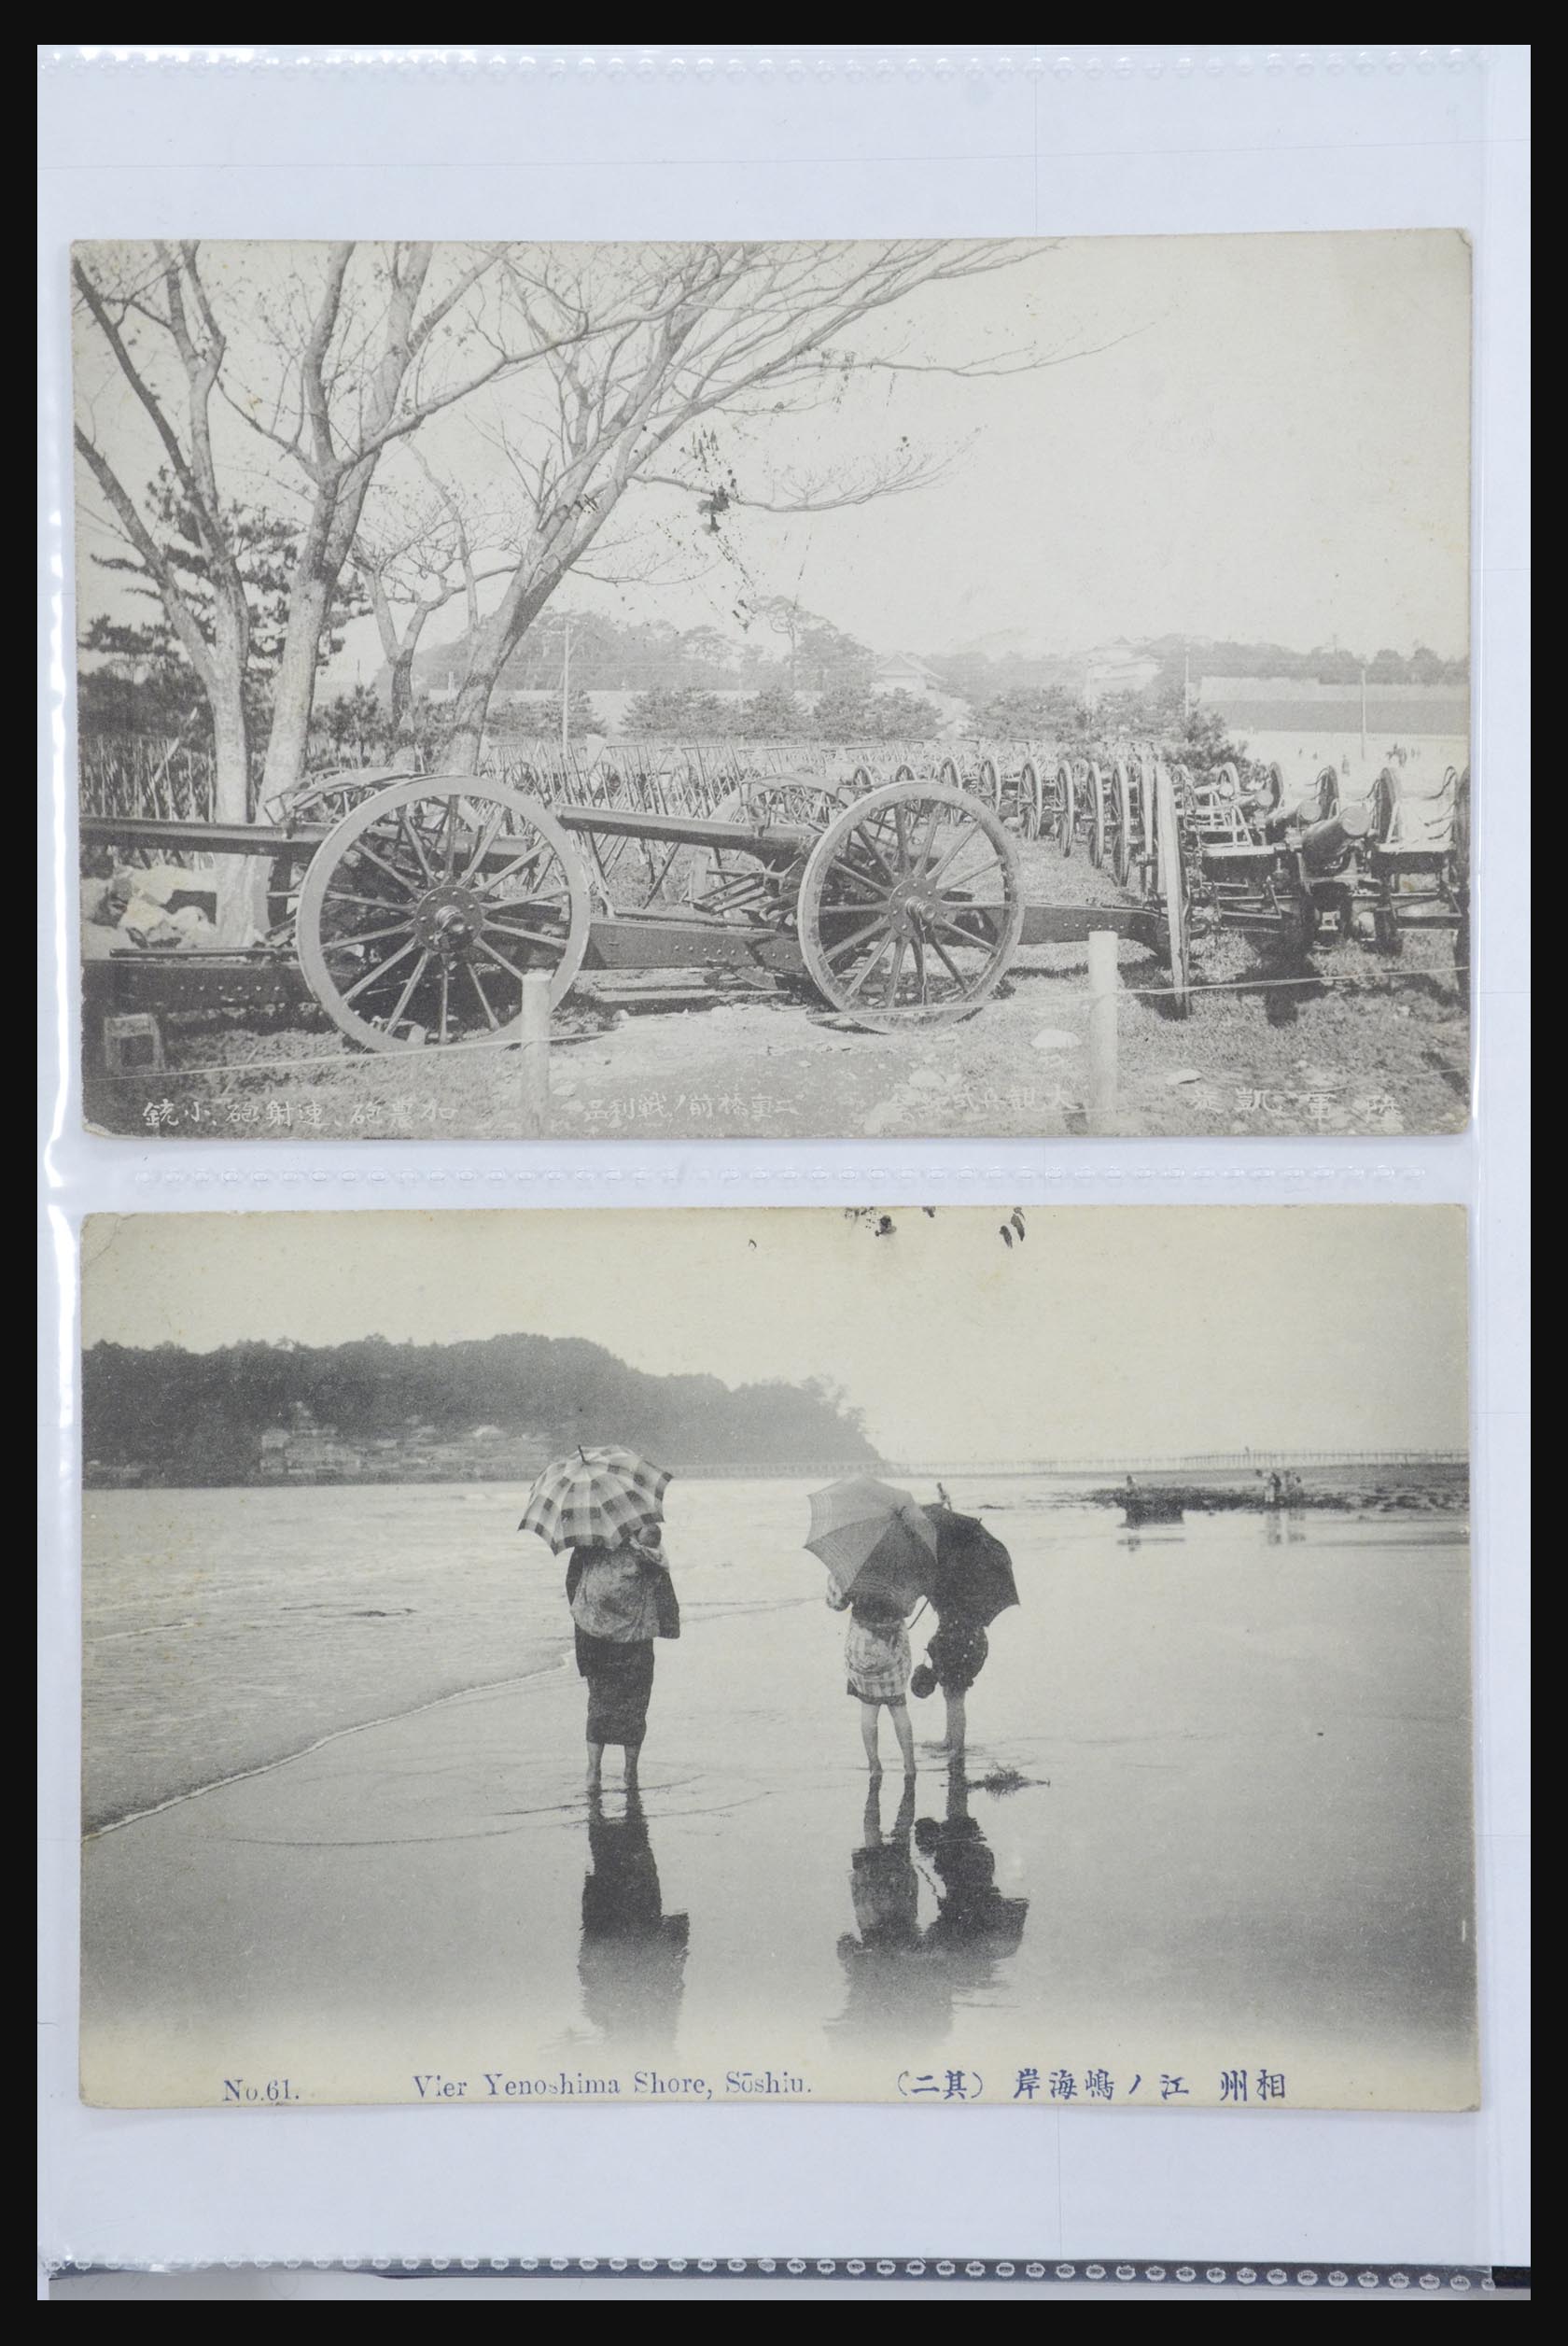 31667 011 - 31667 Japan picture postcards 1900-1920.